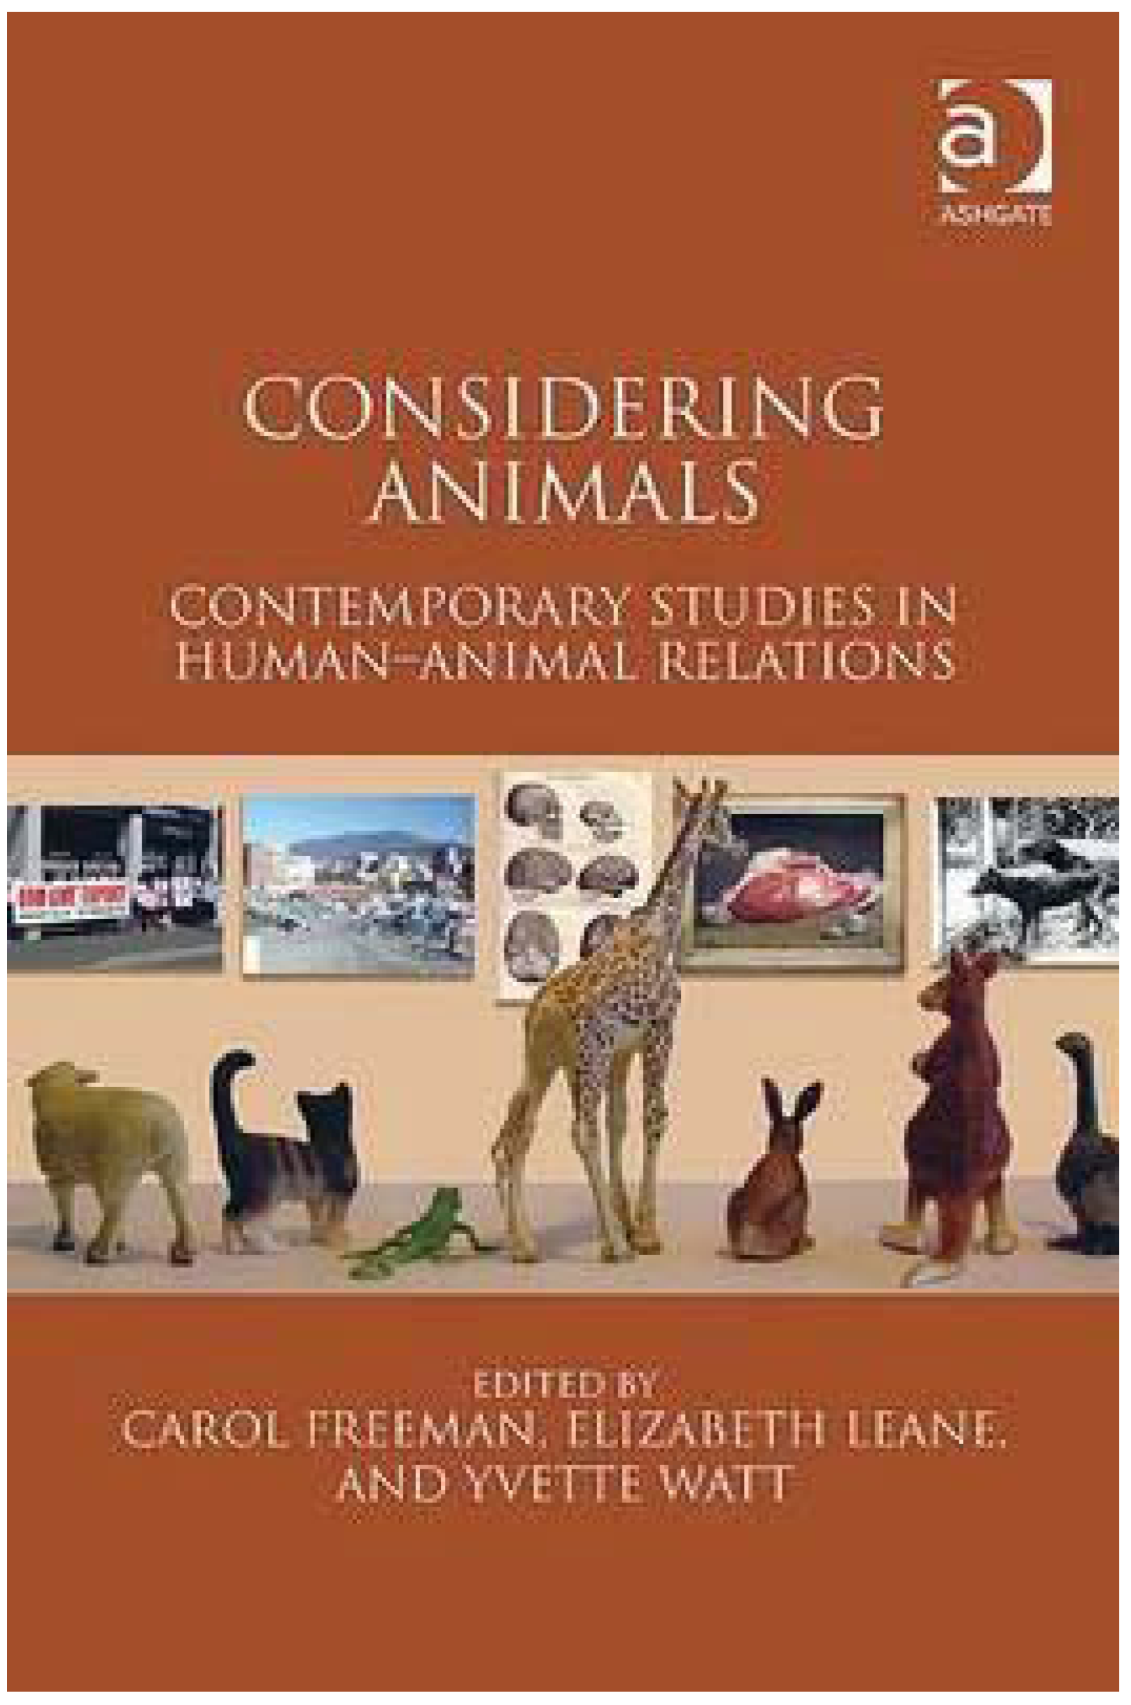 Animals | Free Full-Text | Considering Animals: Contemporary Studies in  Human-Animal Relations. By Carol Freeman, Elizabeth Leane and Yvette Watt.  Ashgate: Surrey, UK, 2011; Hardcover, 236 pp; ISBN 978-1-4094-0013-4